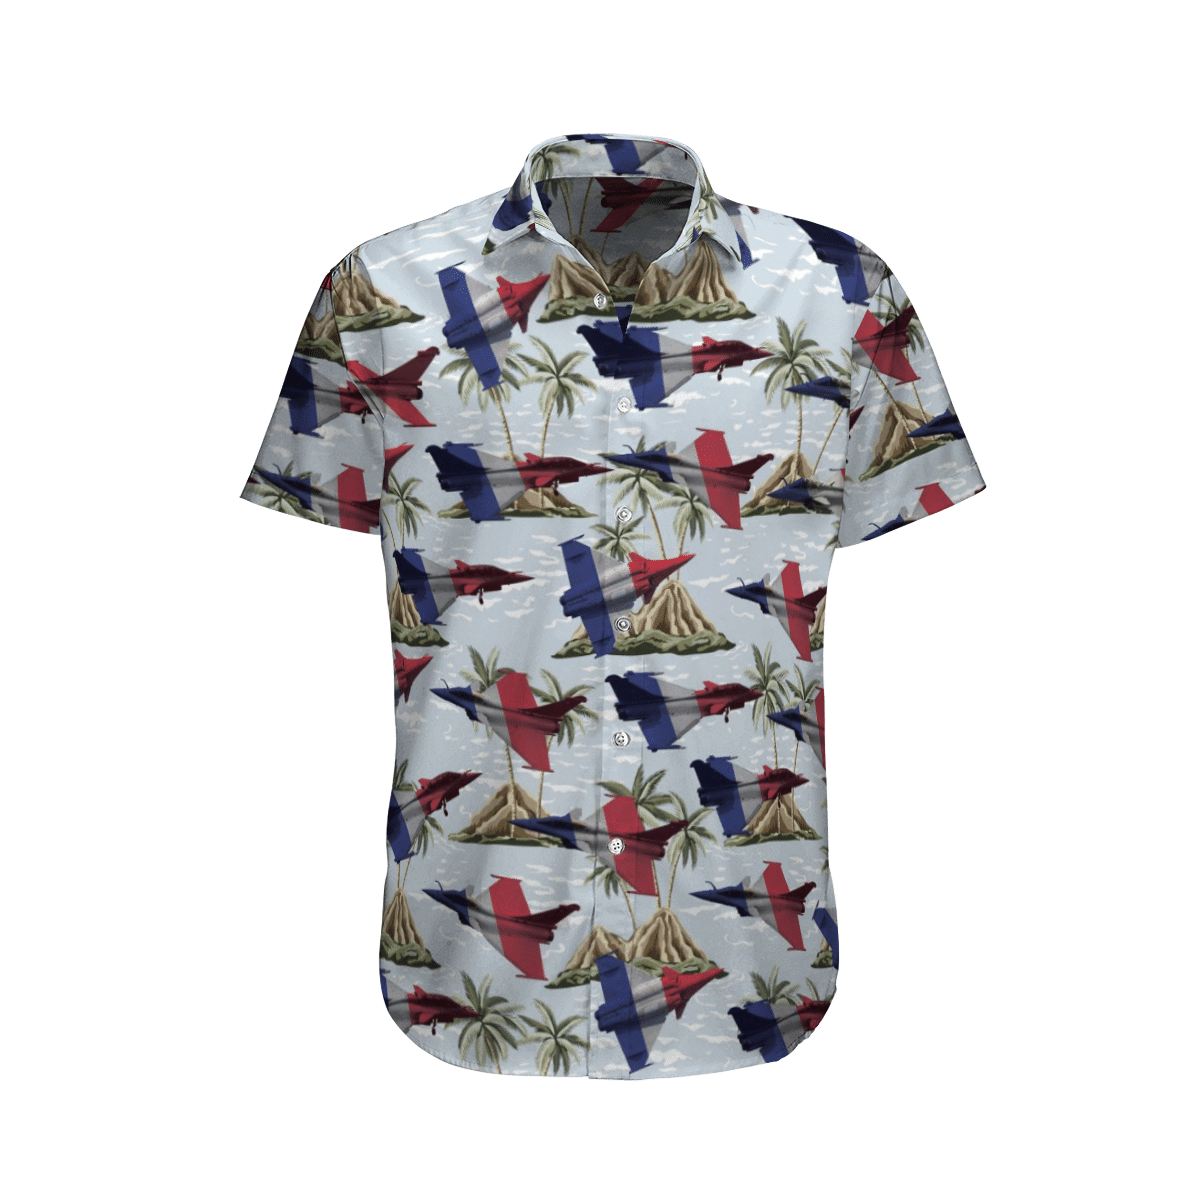 Get a new Hawaiian shirt to enjoy summer vacation 128